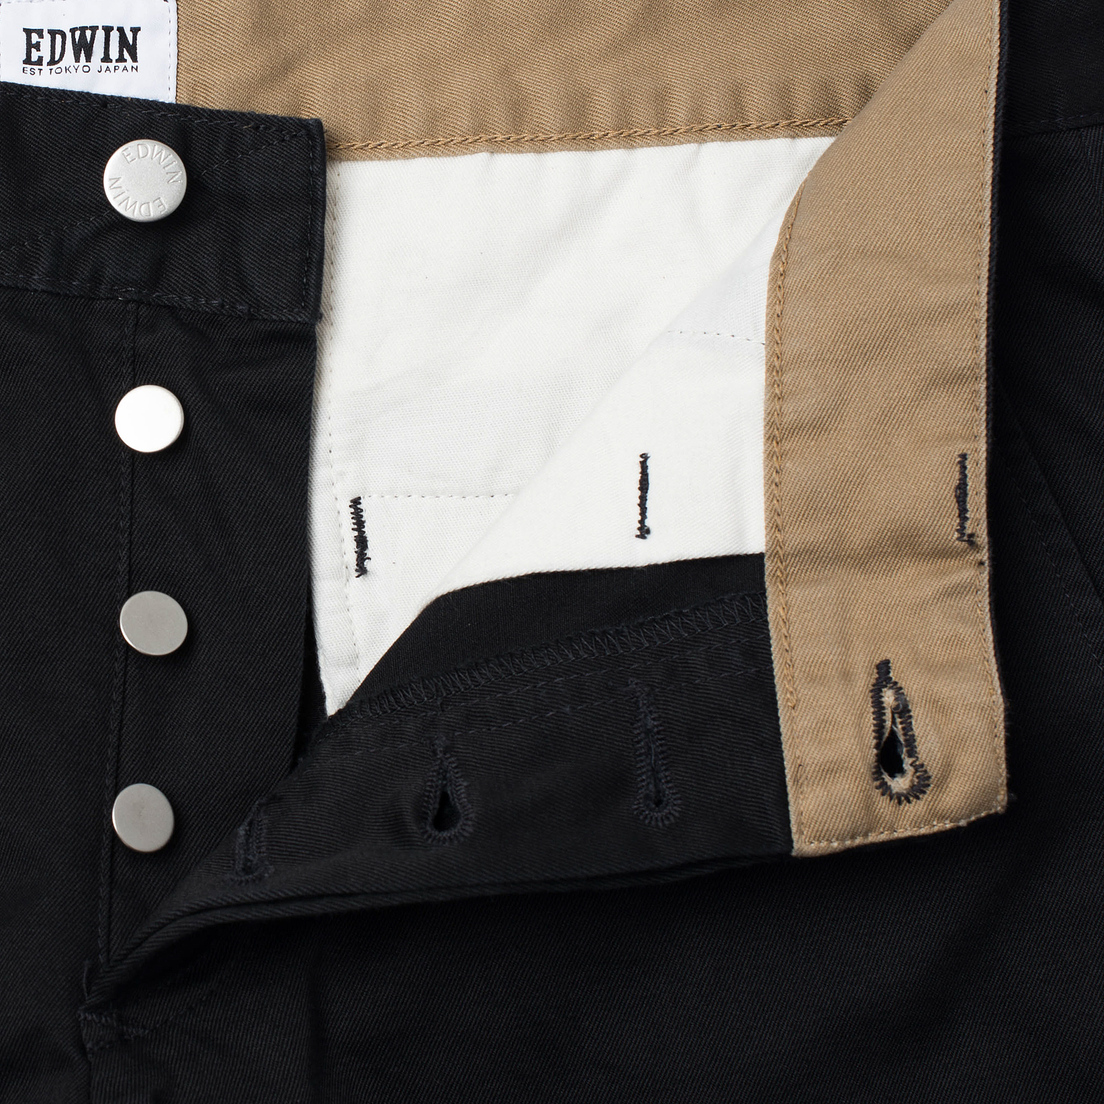 Edwin Мужские брюки ED-55 Chino Compact Twill